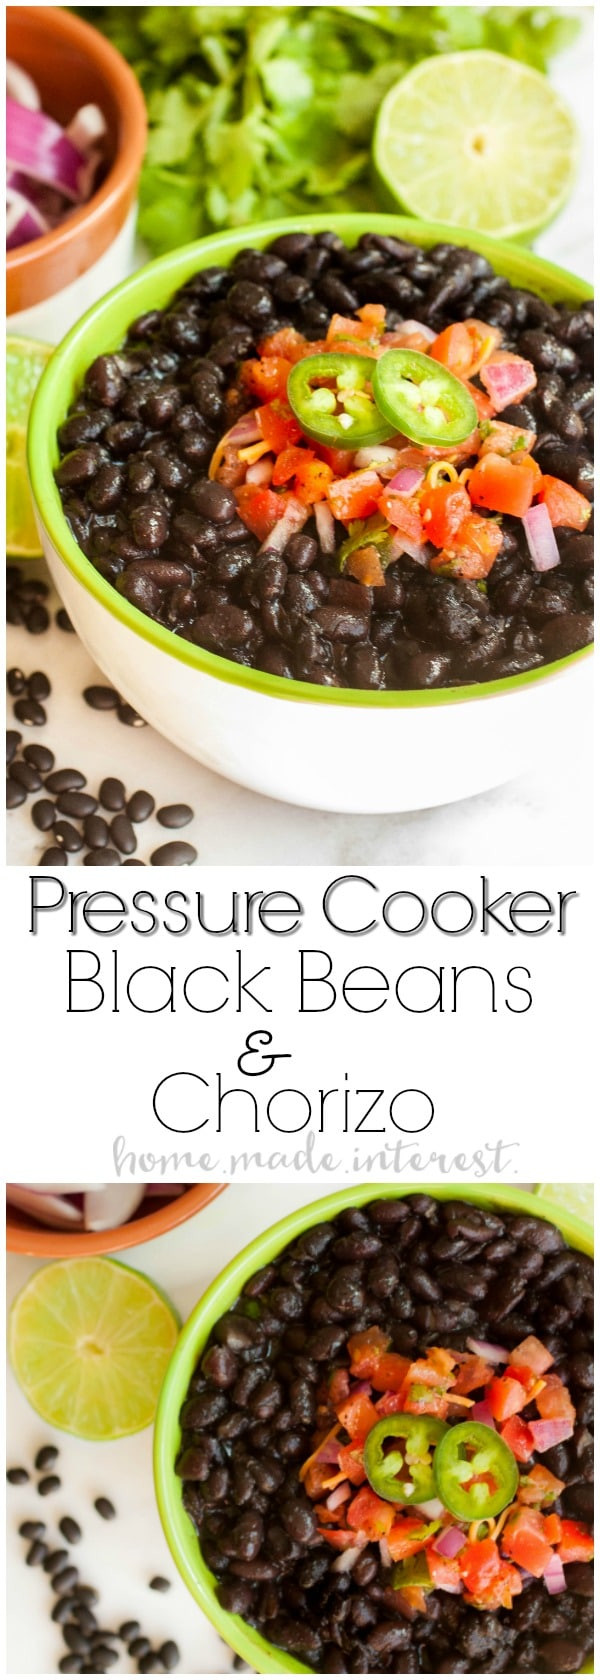 Pressure Cooker Black Beans And Rice
 Pressure Cooker Black Beans and Chorizo Home Made